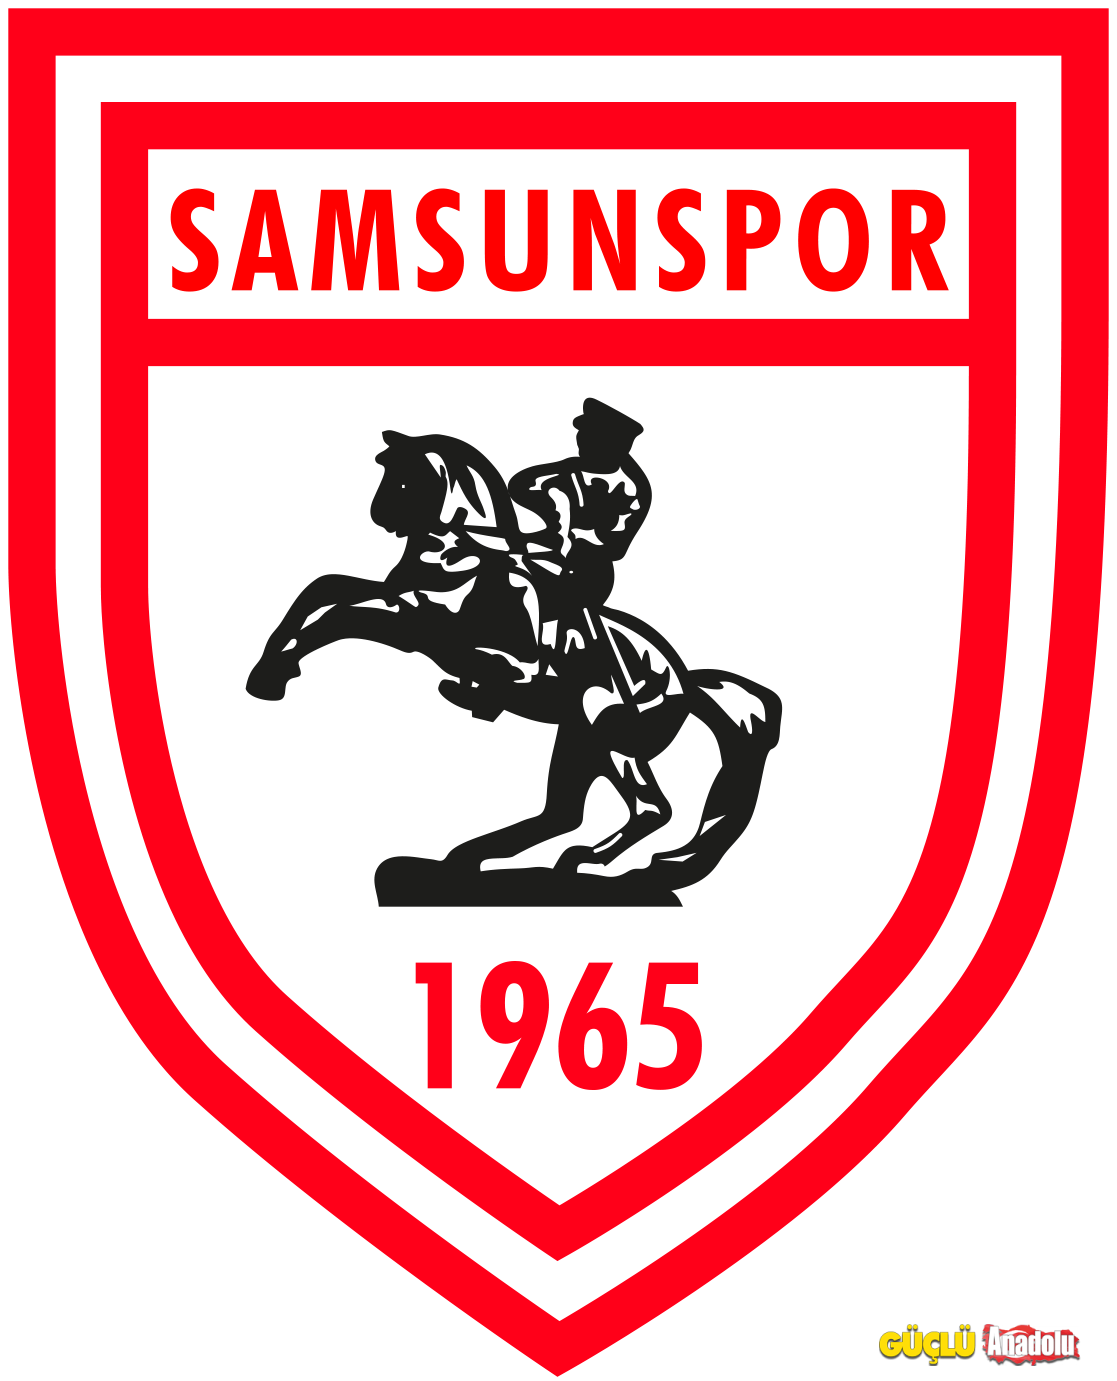 Samsunspor_logo_2